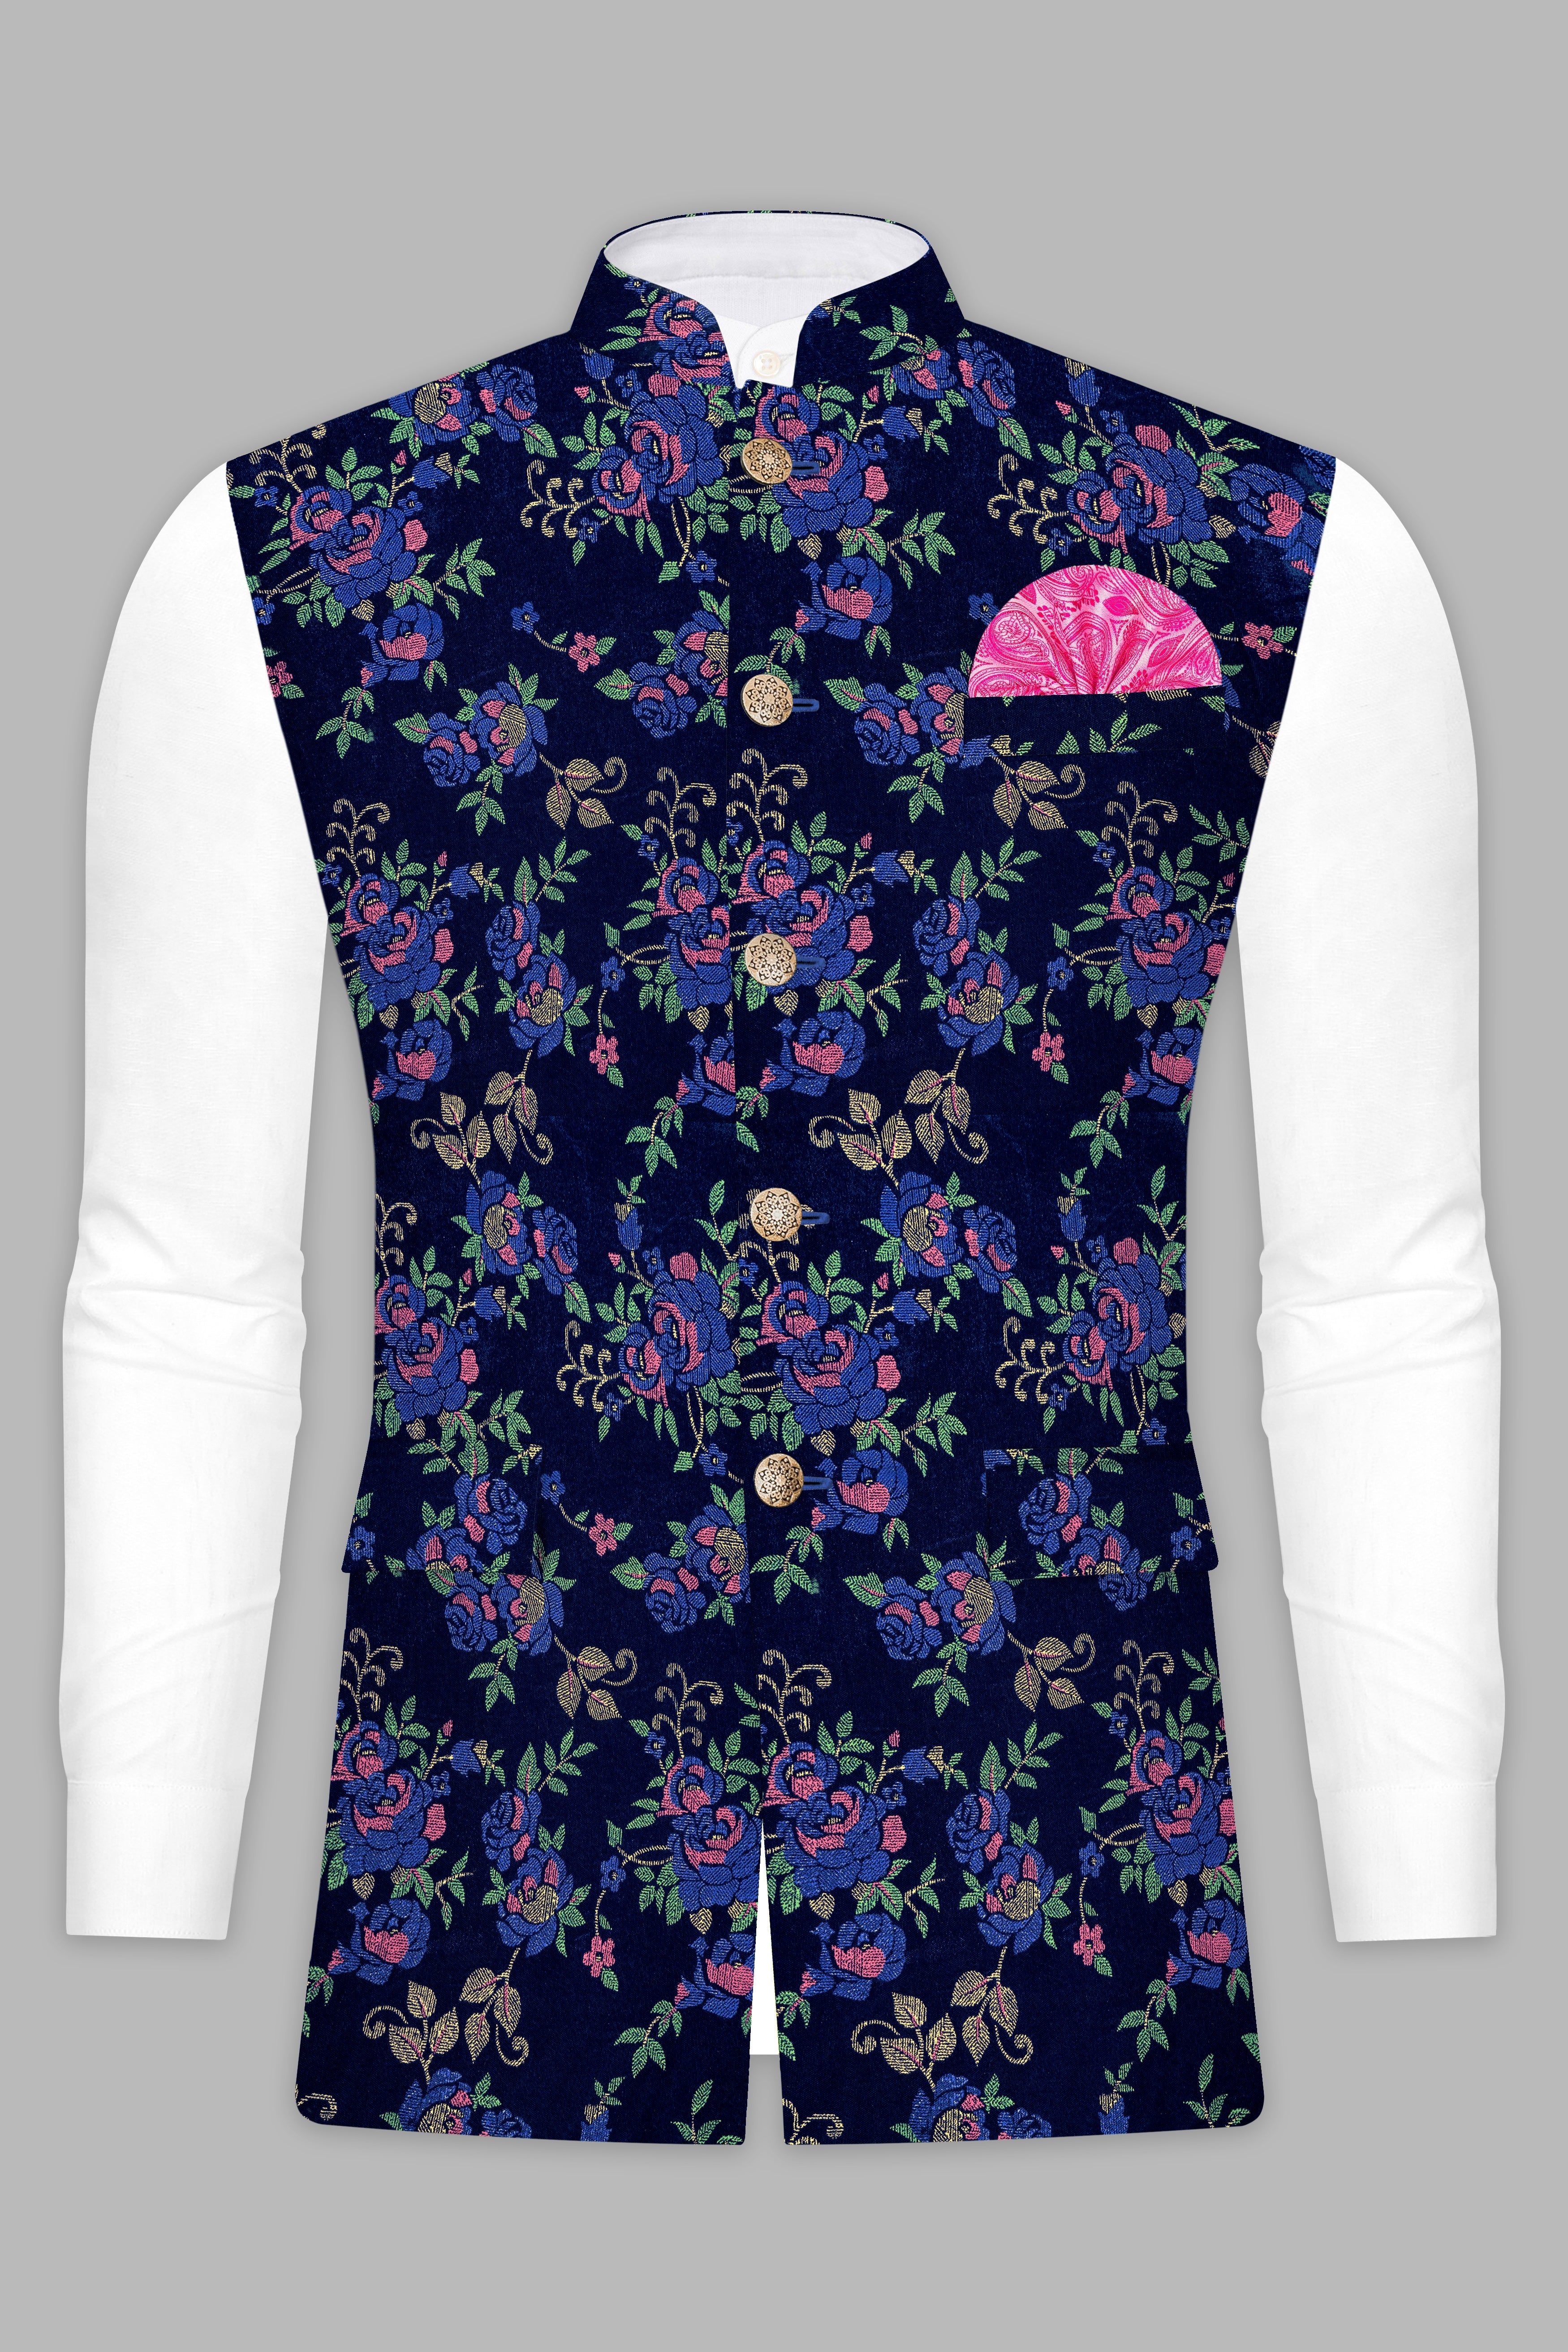 Tangaroa Blue And Mauvelous Pink Velvet Multicolour Floral Jacquard Weave Nehru Jacket